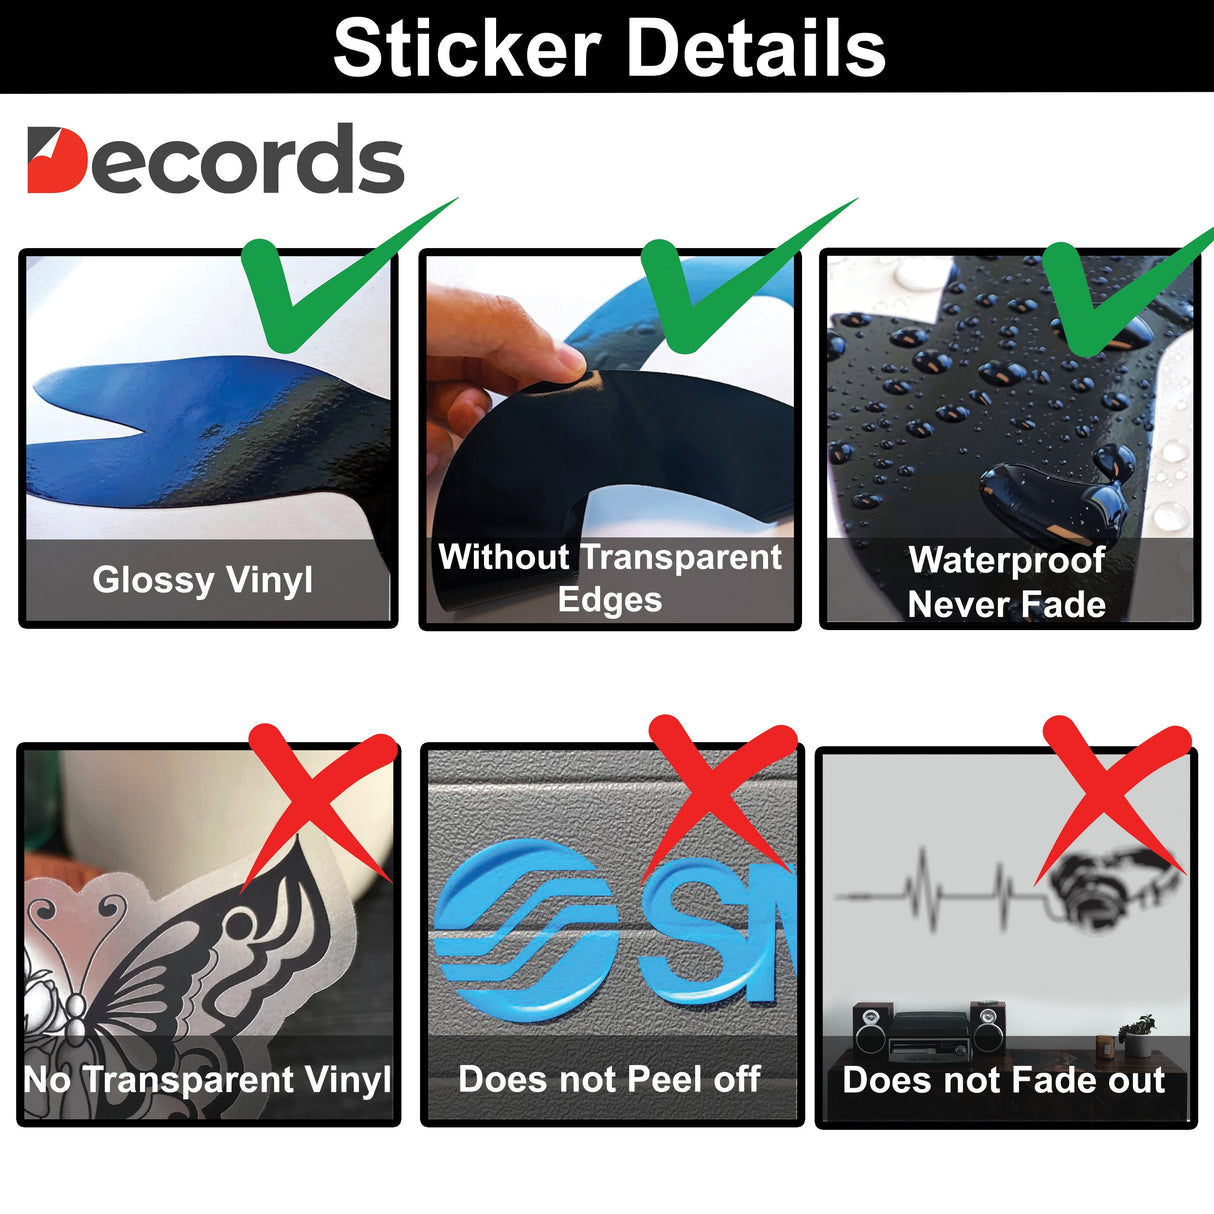 Creative Scuba Diver Silhouette Wall Sticker - Fire Extinguisher Deep Dive Design